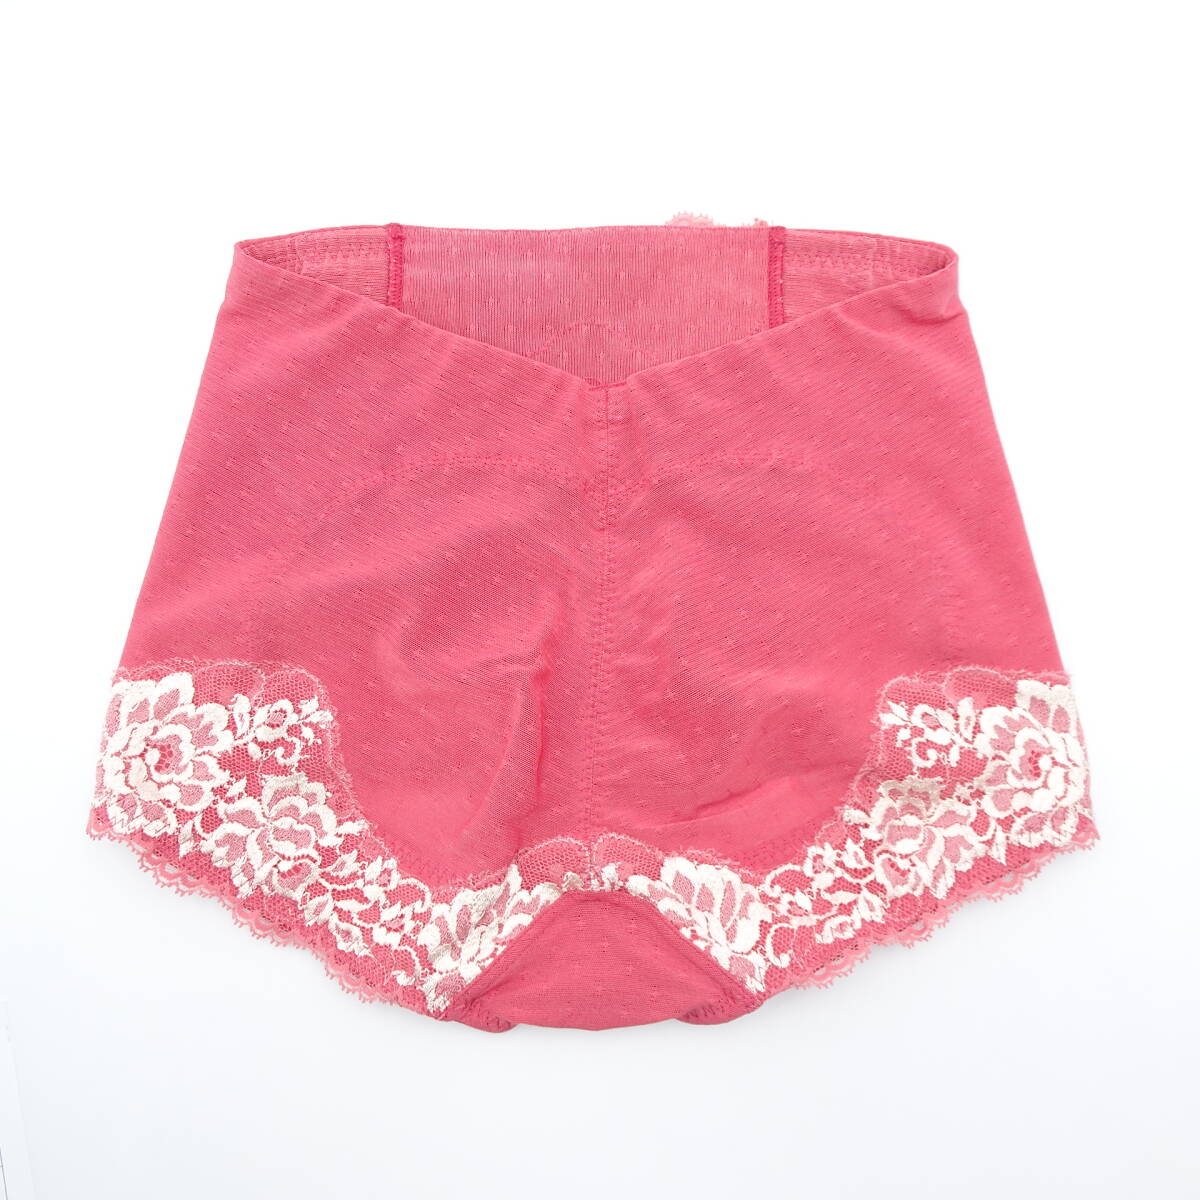  maru koryumies Short girdle orange shu pink M64 correction underwear 